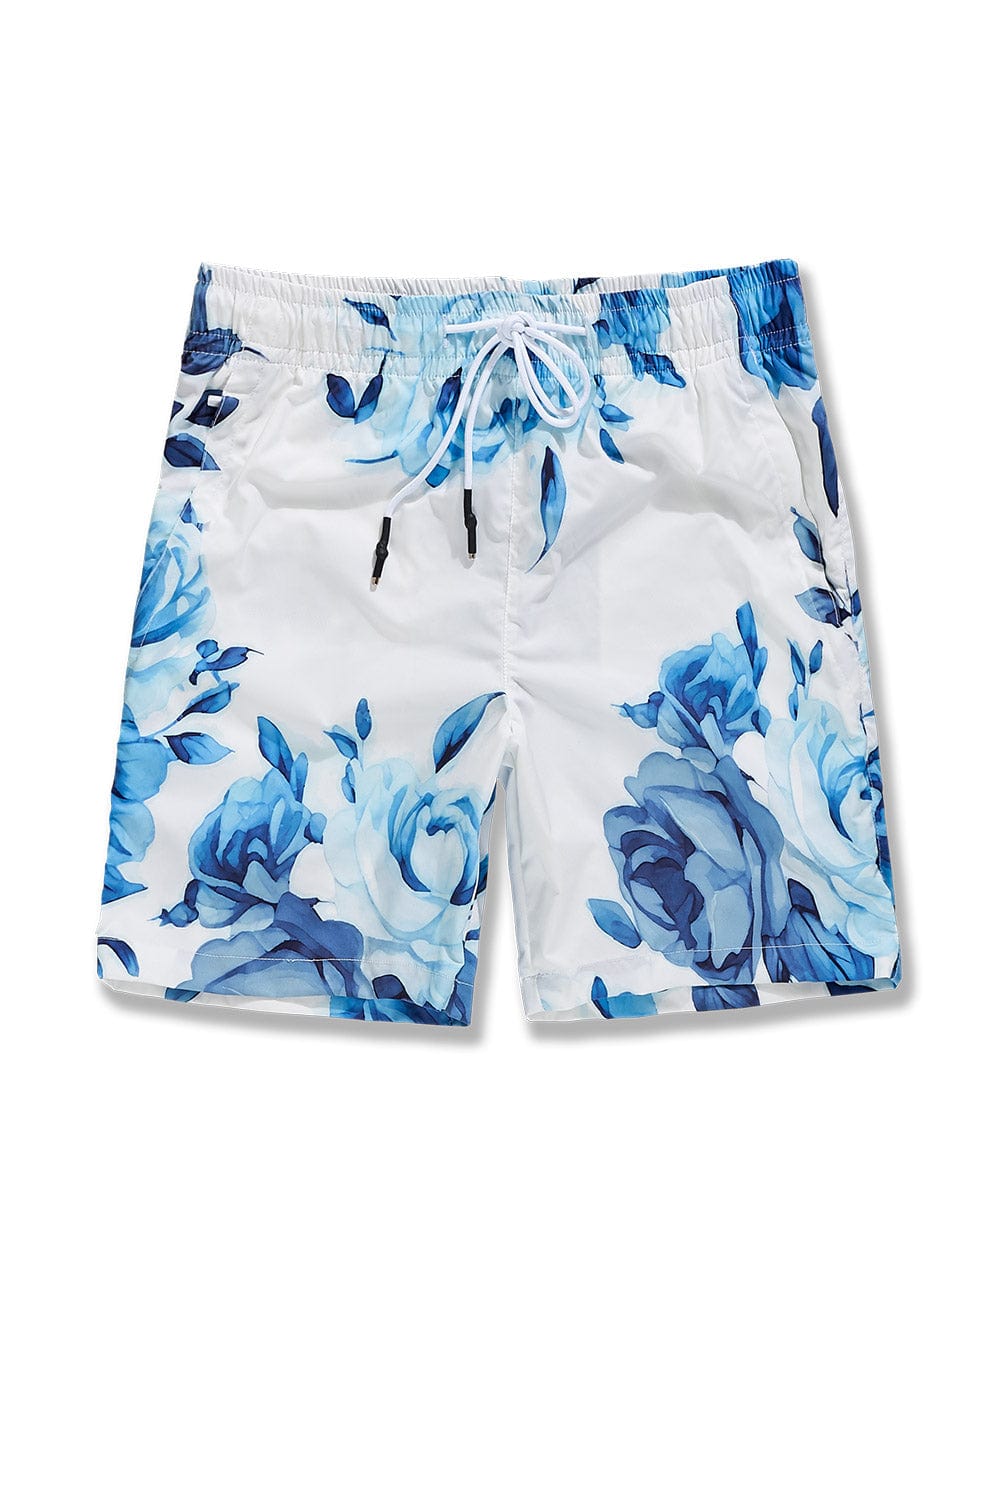 Jordan Craig Retro - Ibiza Lounge Shorts (Blue Floral) Blue Floral / S